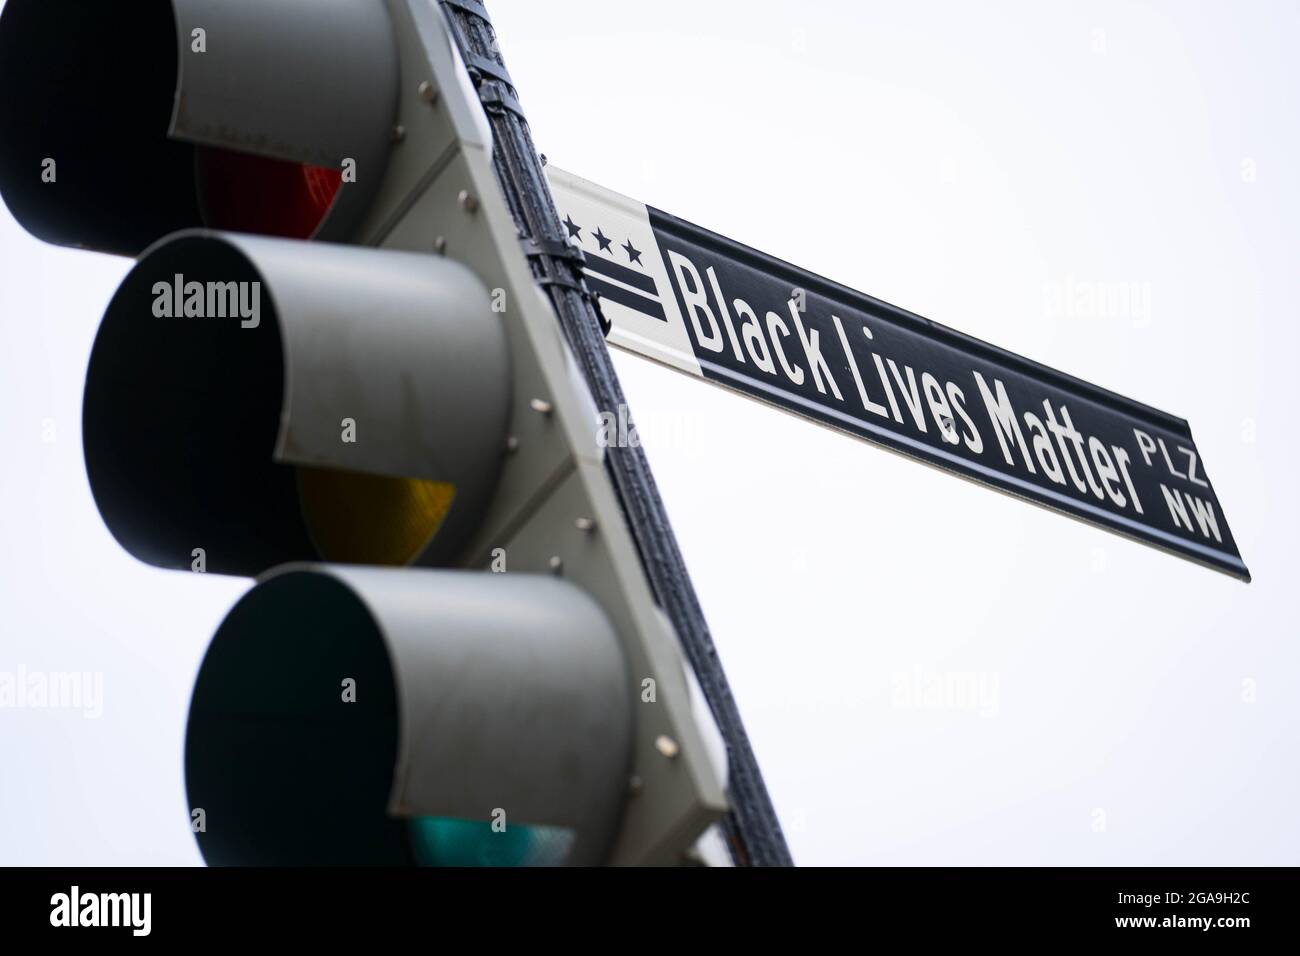 Washington, United States. 29th July, 2021. A street sign marking Black Lives Matter Plaza is seen near the White House in Washington, DC, on Thursday, July 29, 2021. Photo by Sarah Silbiger/UPI Credit: UPI/Alamy Live News Stock Photo